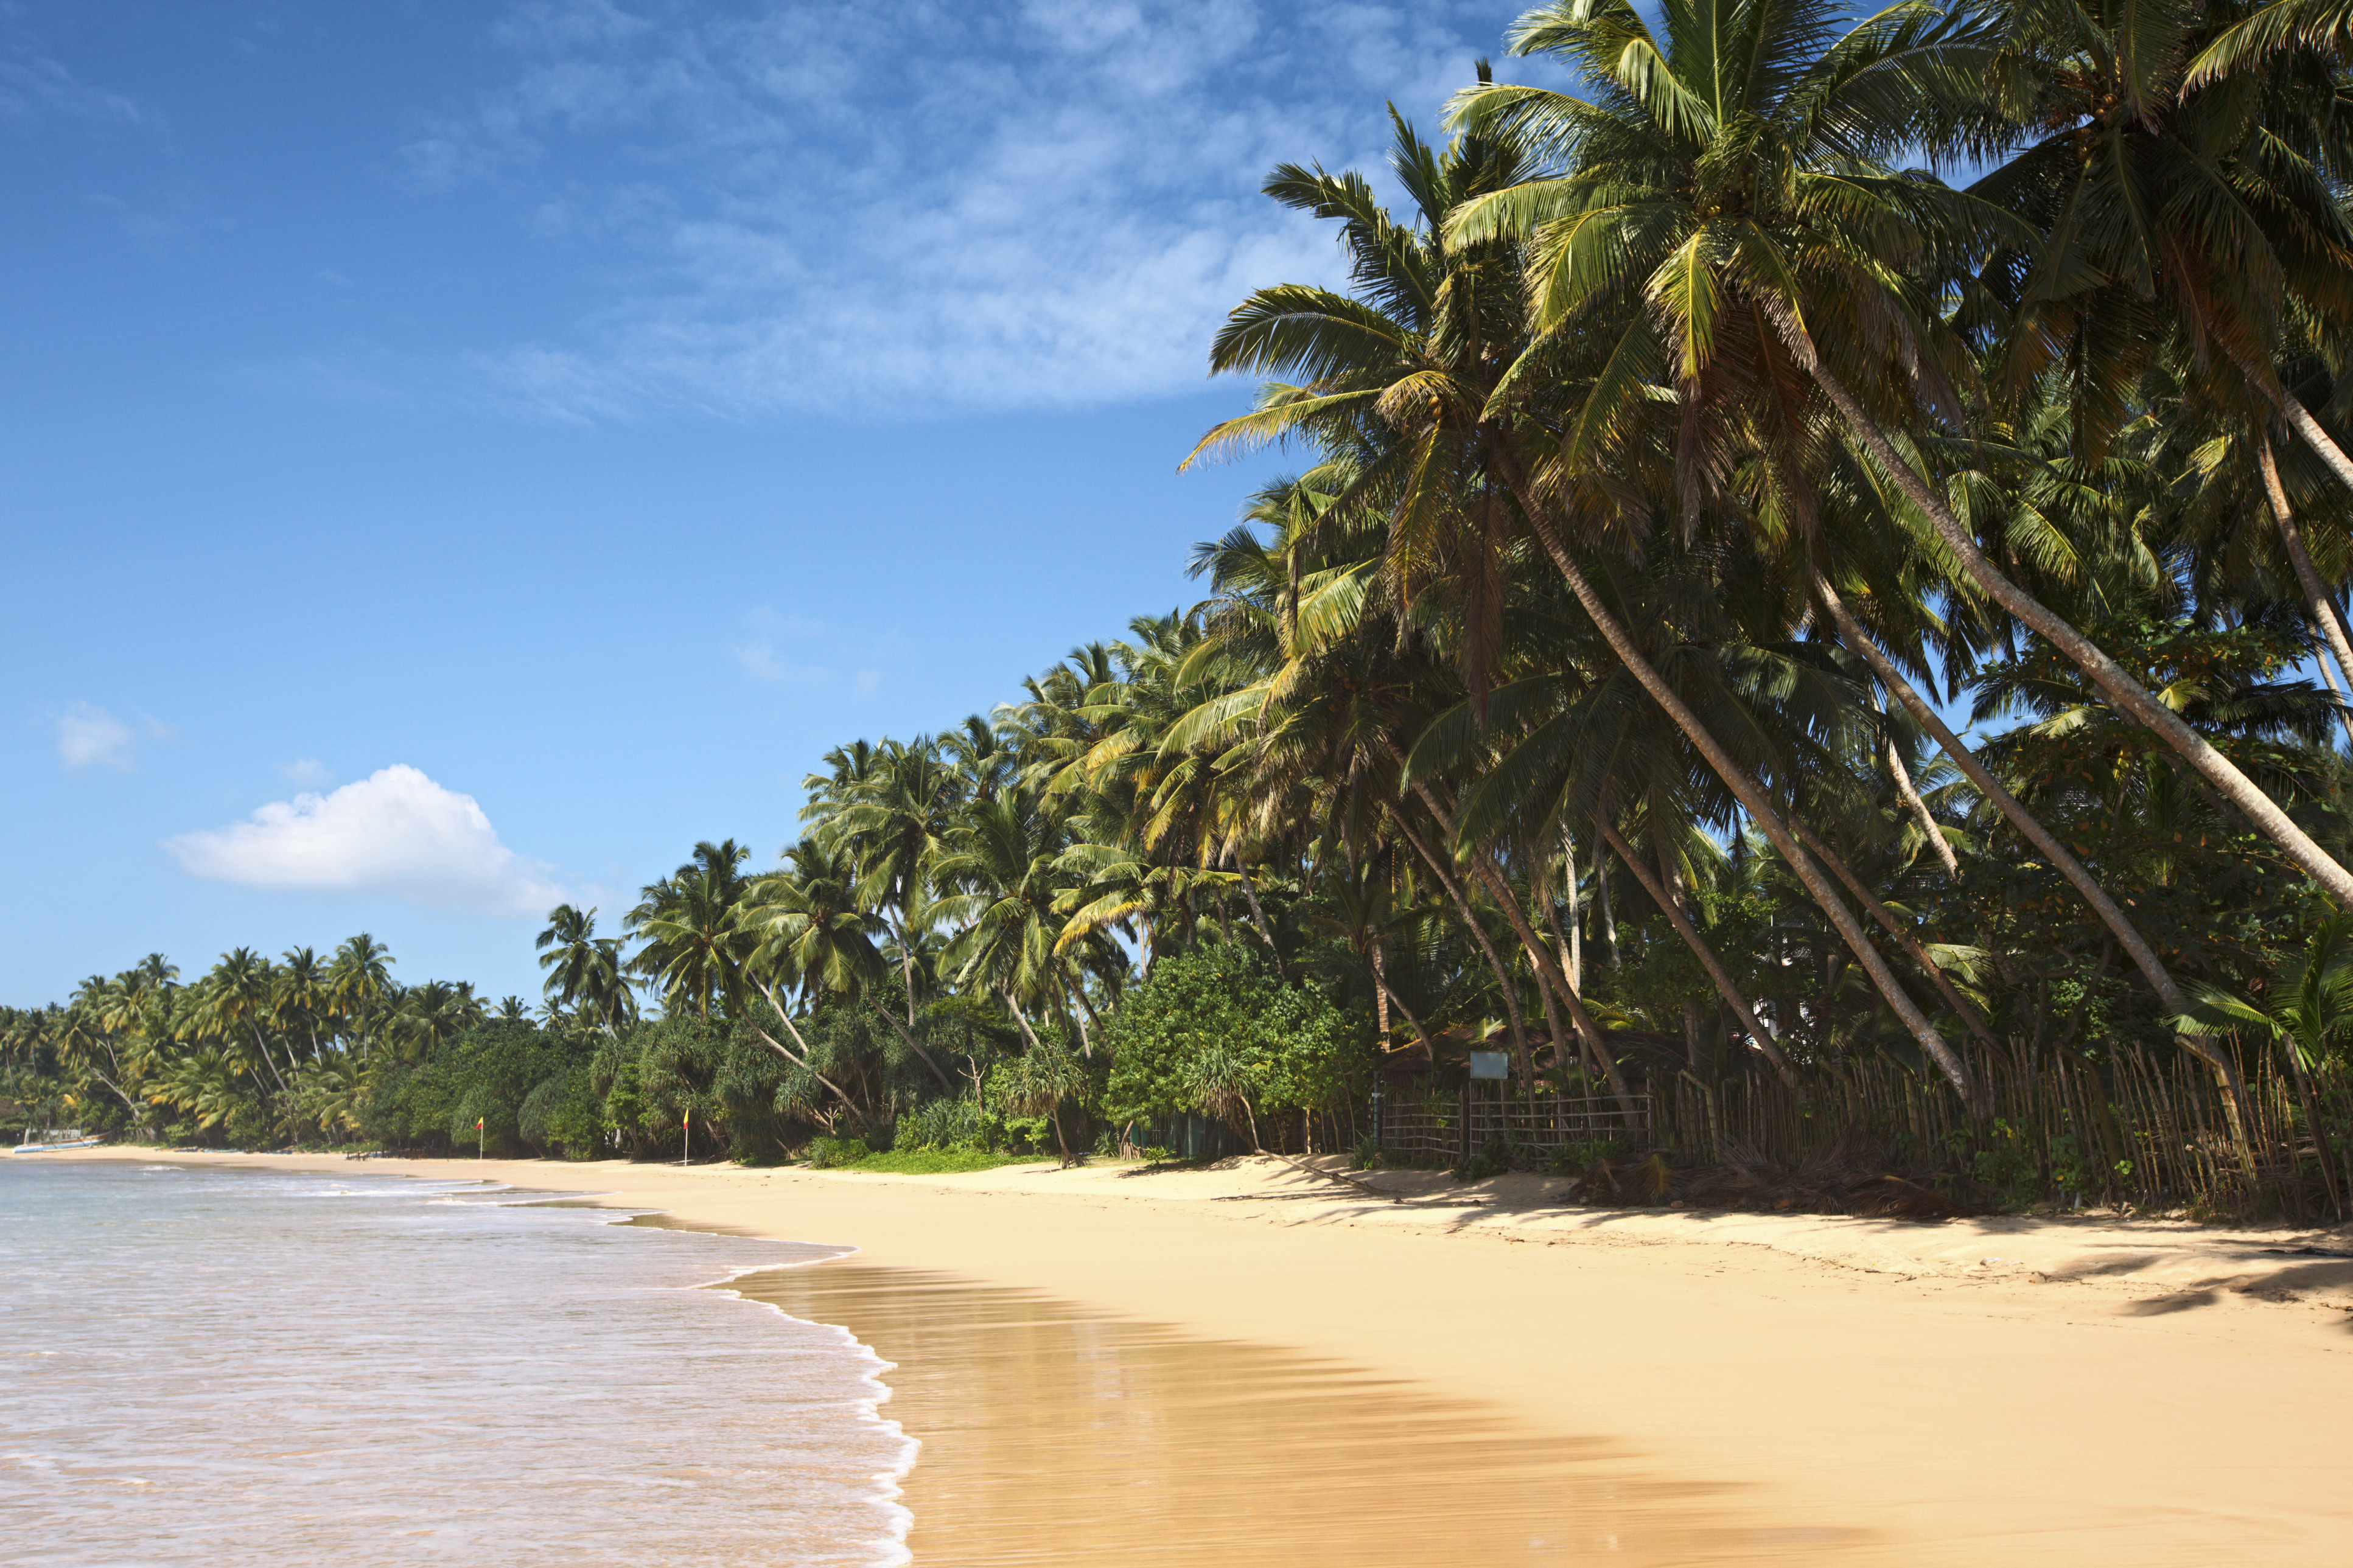 Sri Lanka has beautiful beaches